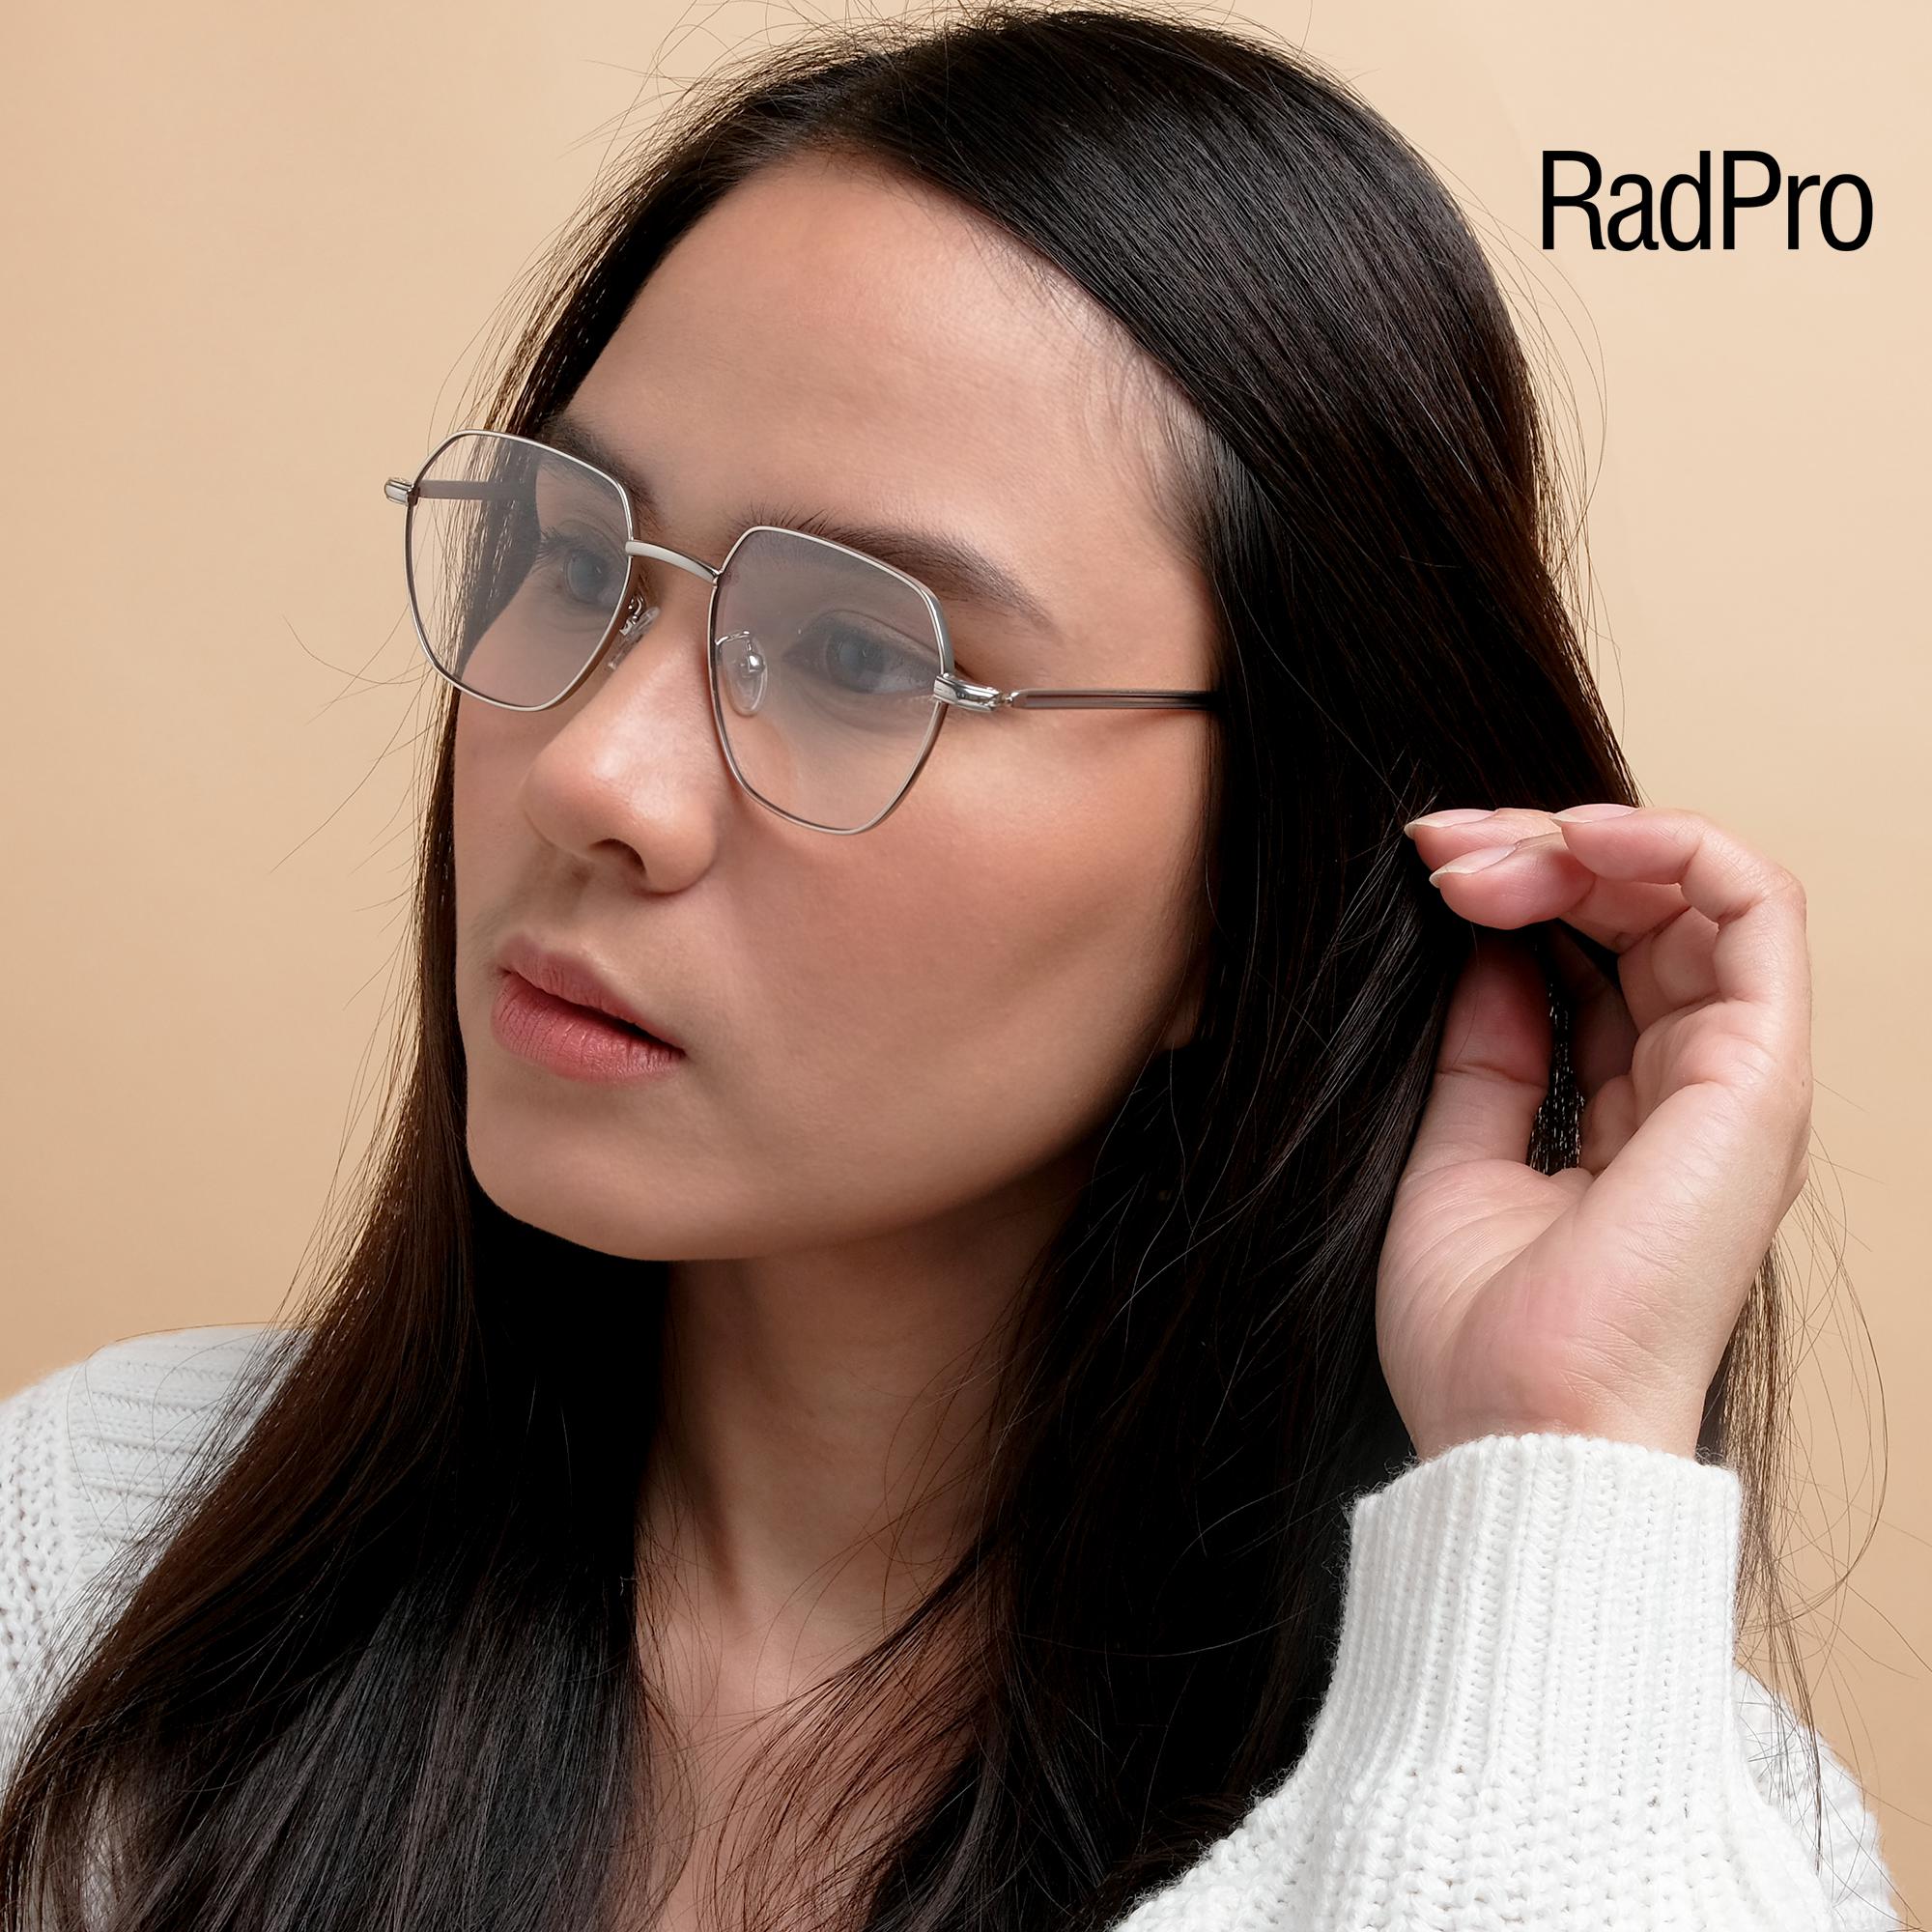 TAJIMI Radpro Eyeglasses